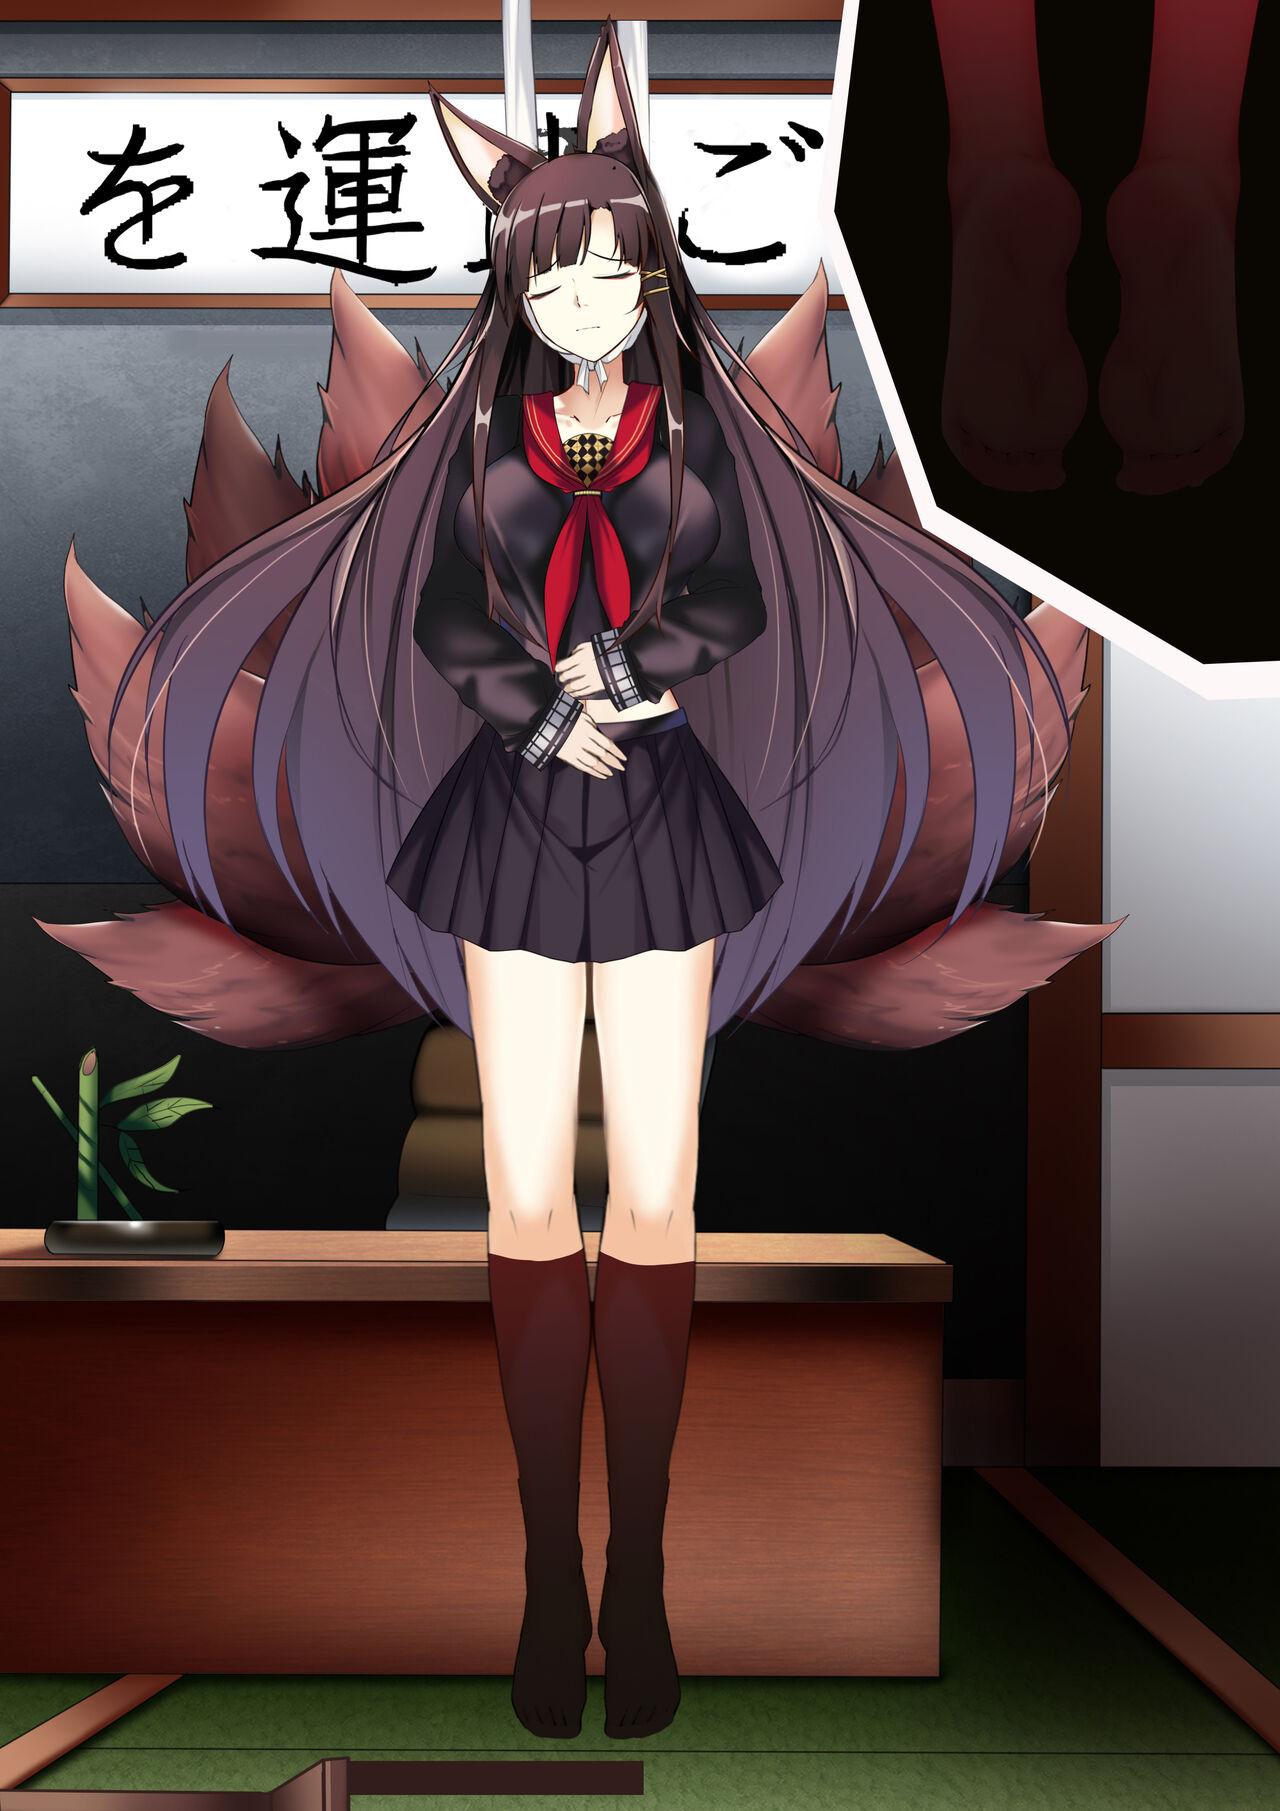 Akagi hanged herself in her office 108